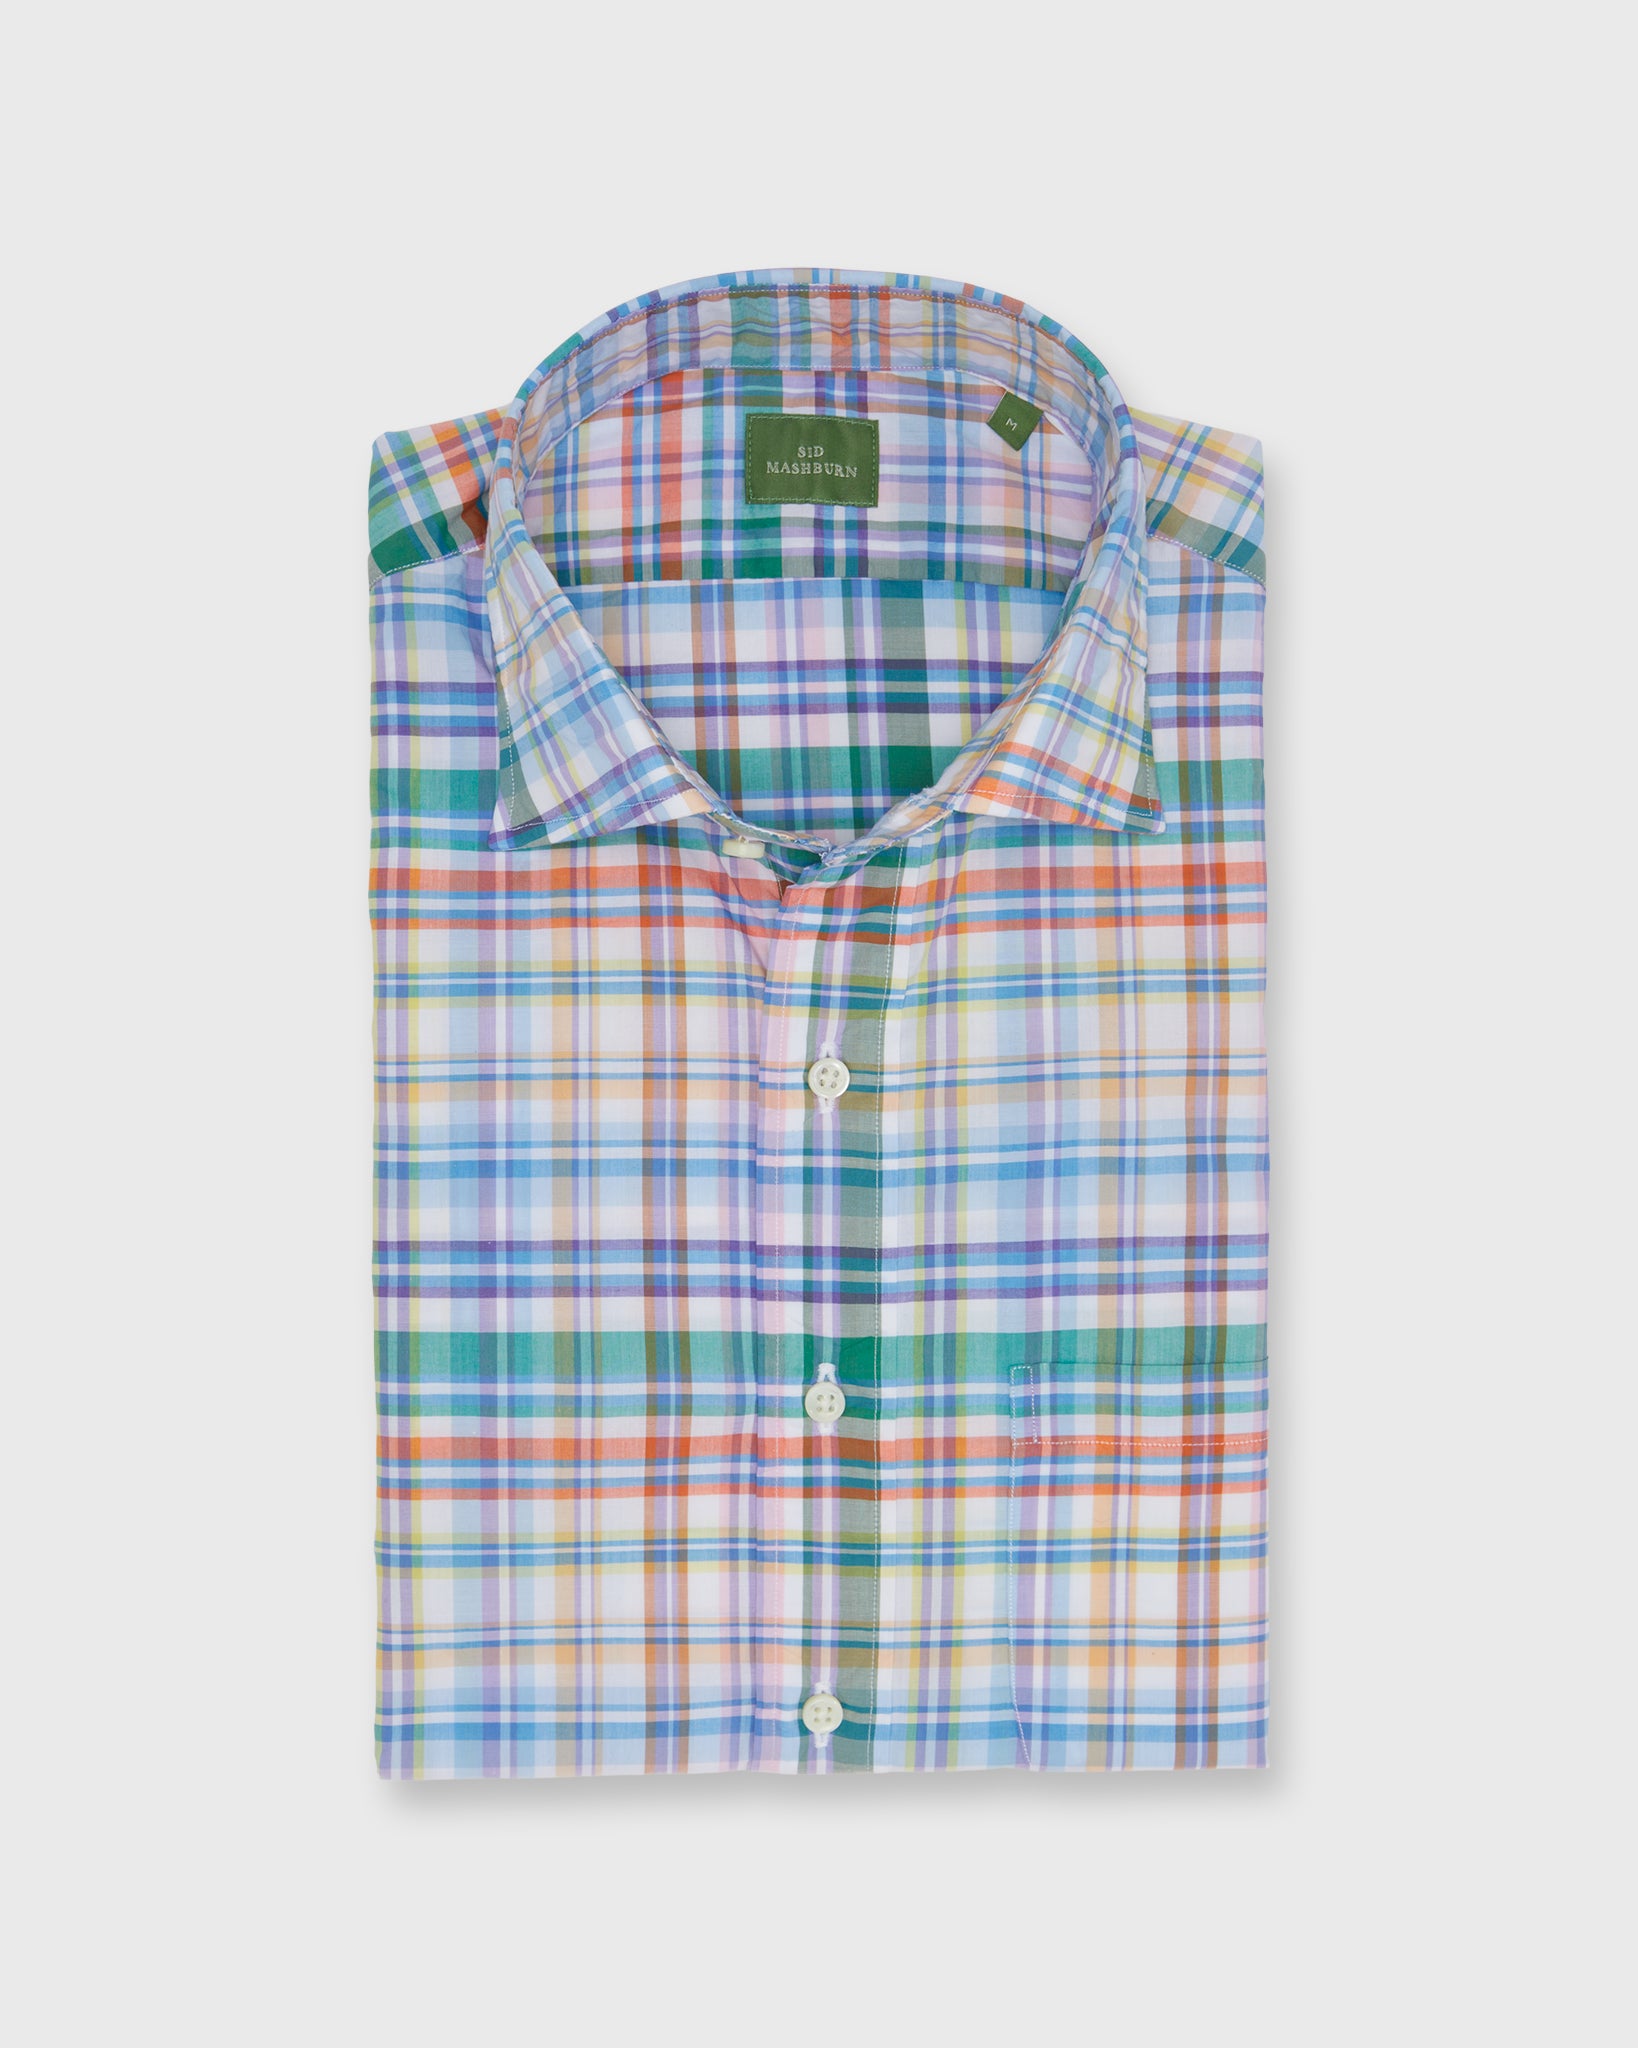 Spread Collar Sport Shirt in Green/Blue/Pink Multi Plaid Poplin